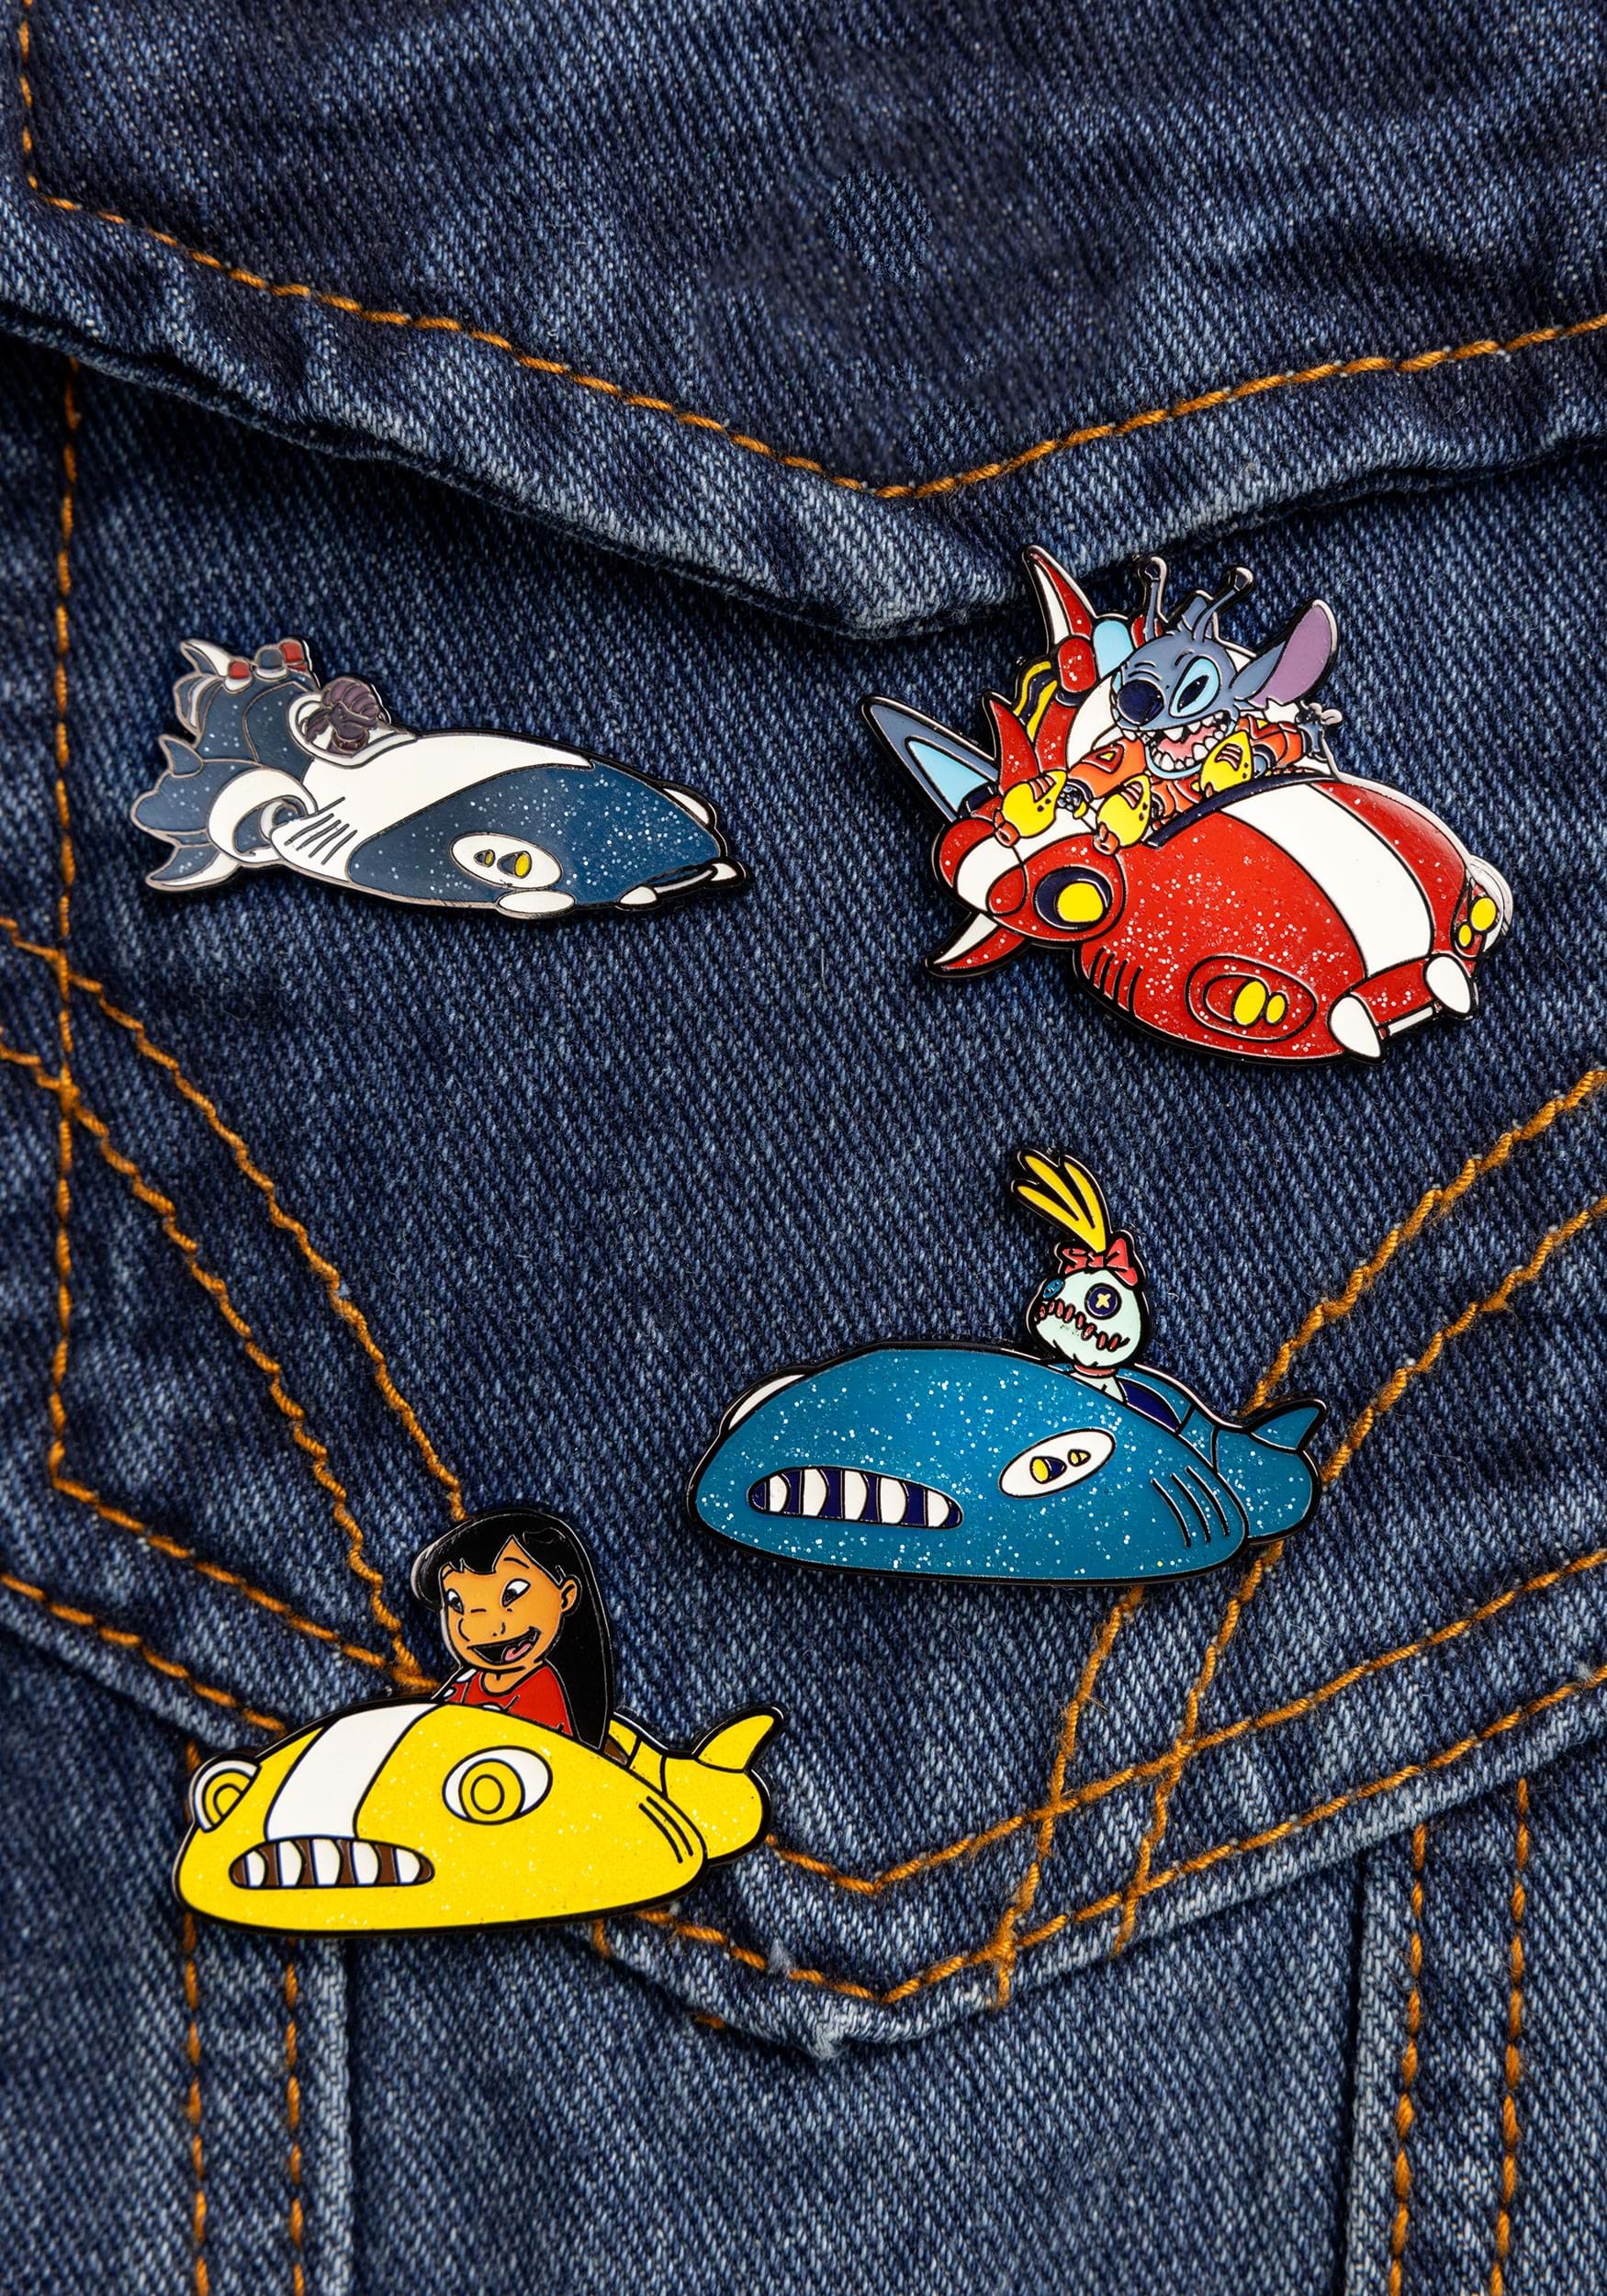 Lilo and Stitch 'Stitch x Mickey' Enamel Pin - Distinct Pins